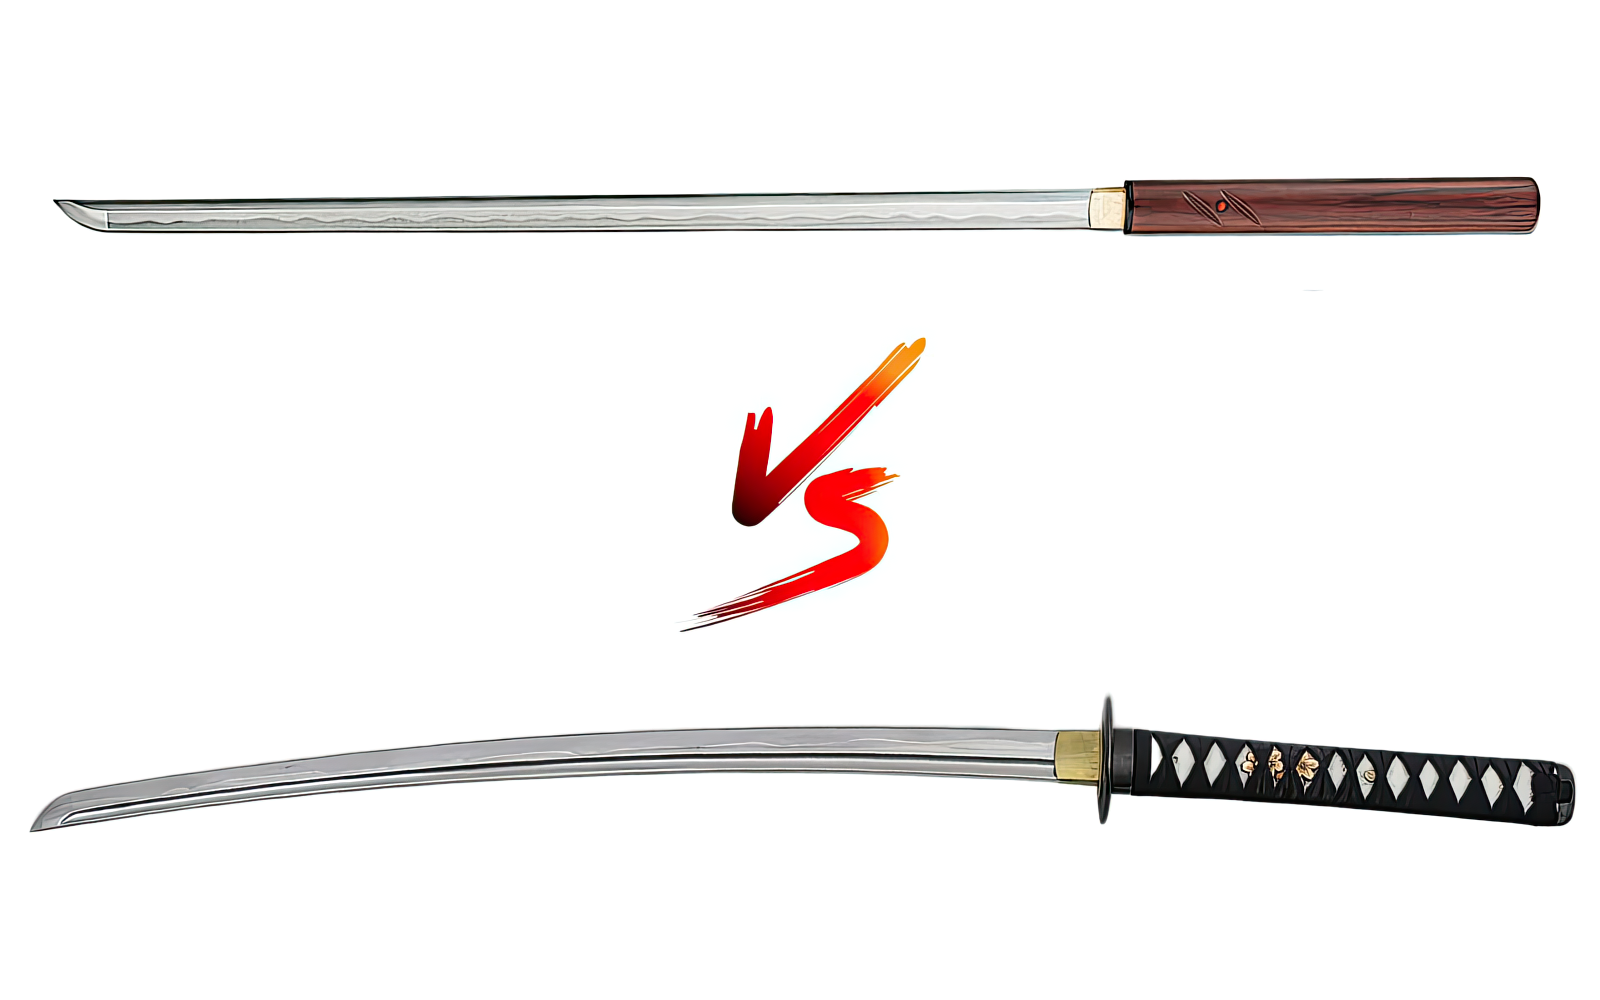 Chokuto vs. Katana: Japan’s First and Last Single-Edged Sword